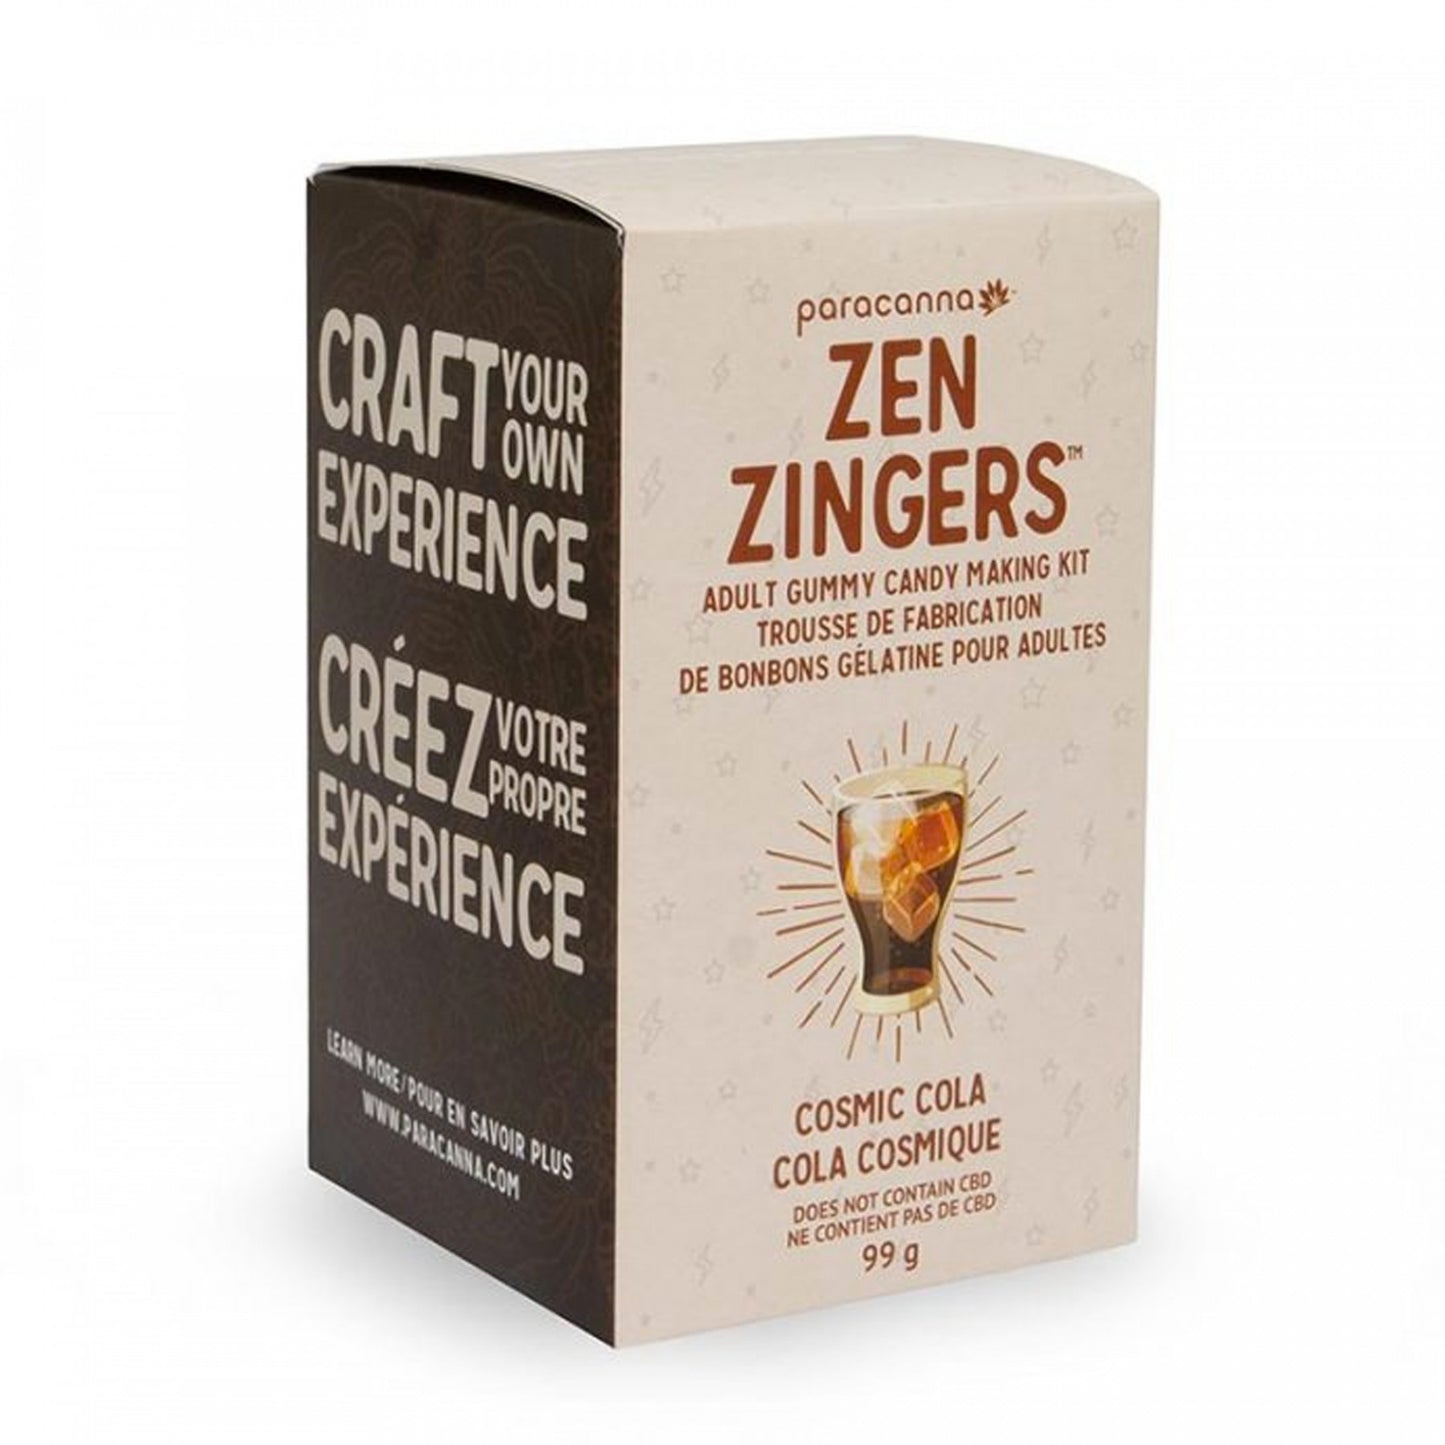 Zen Zinger Cocal Cola Gummy Making Kit